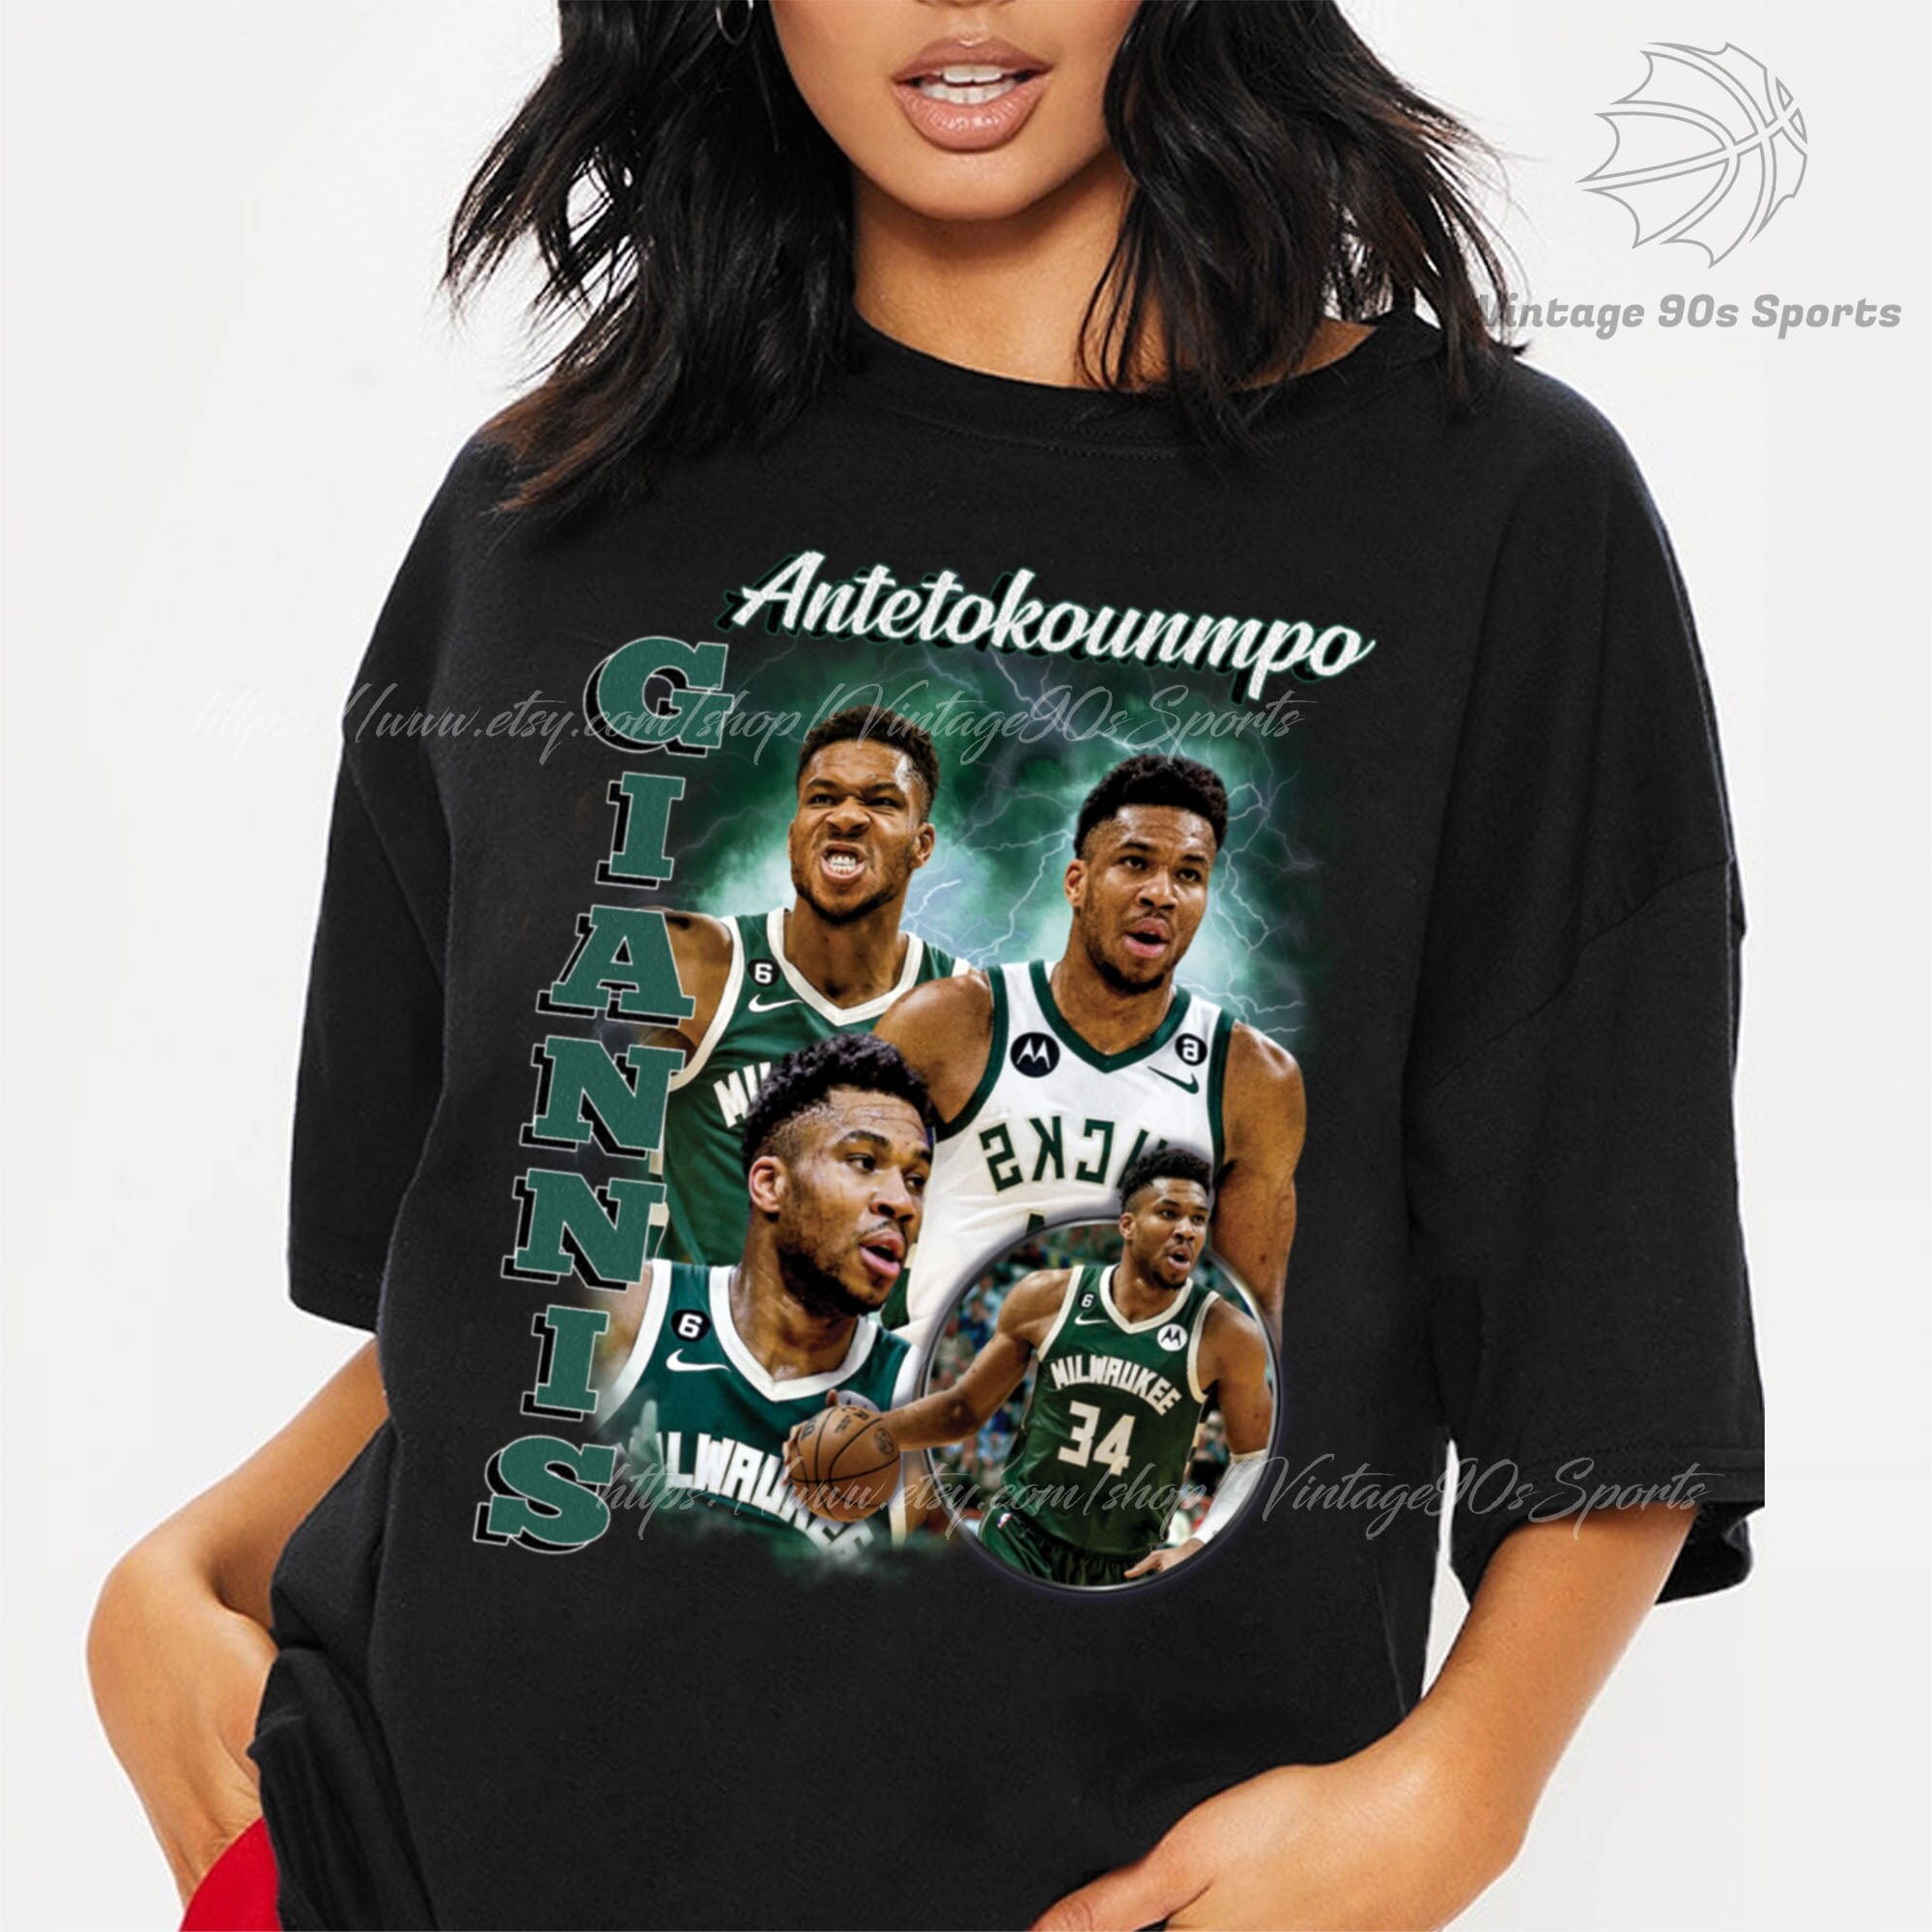 Giannis Antetokounmpo Shirt Merchandise Professional Players Basketball  Vintage Tshirt Classic Retro 90s Unisex Sweatshirt Hoodie GRD52